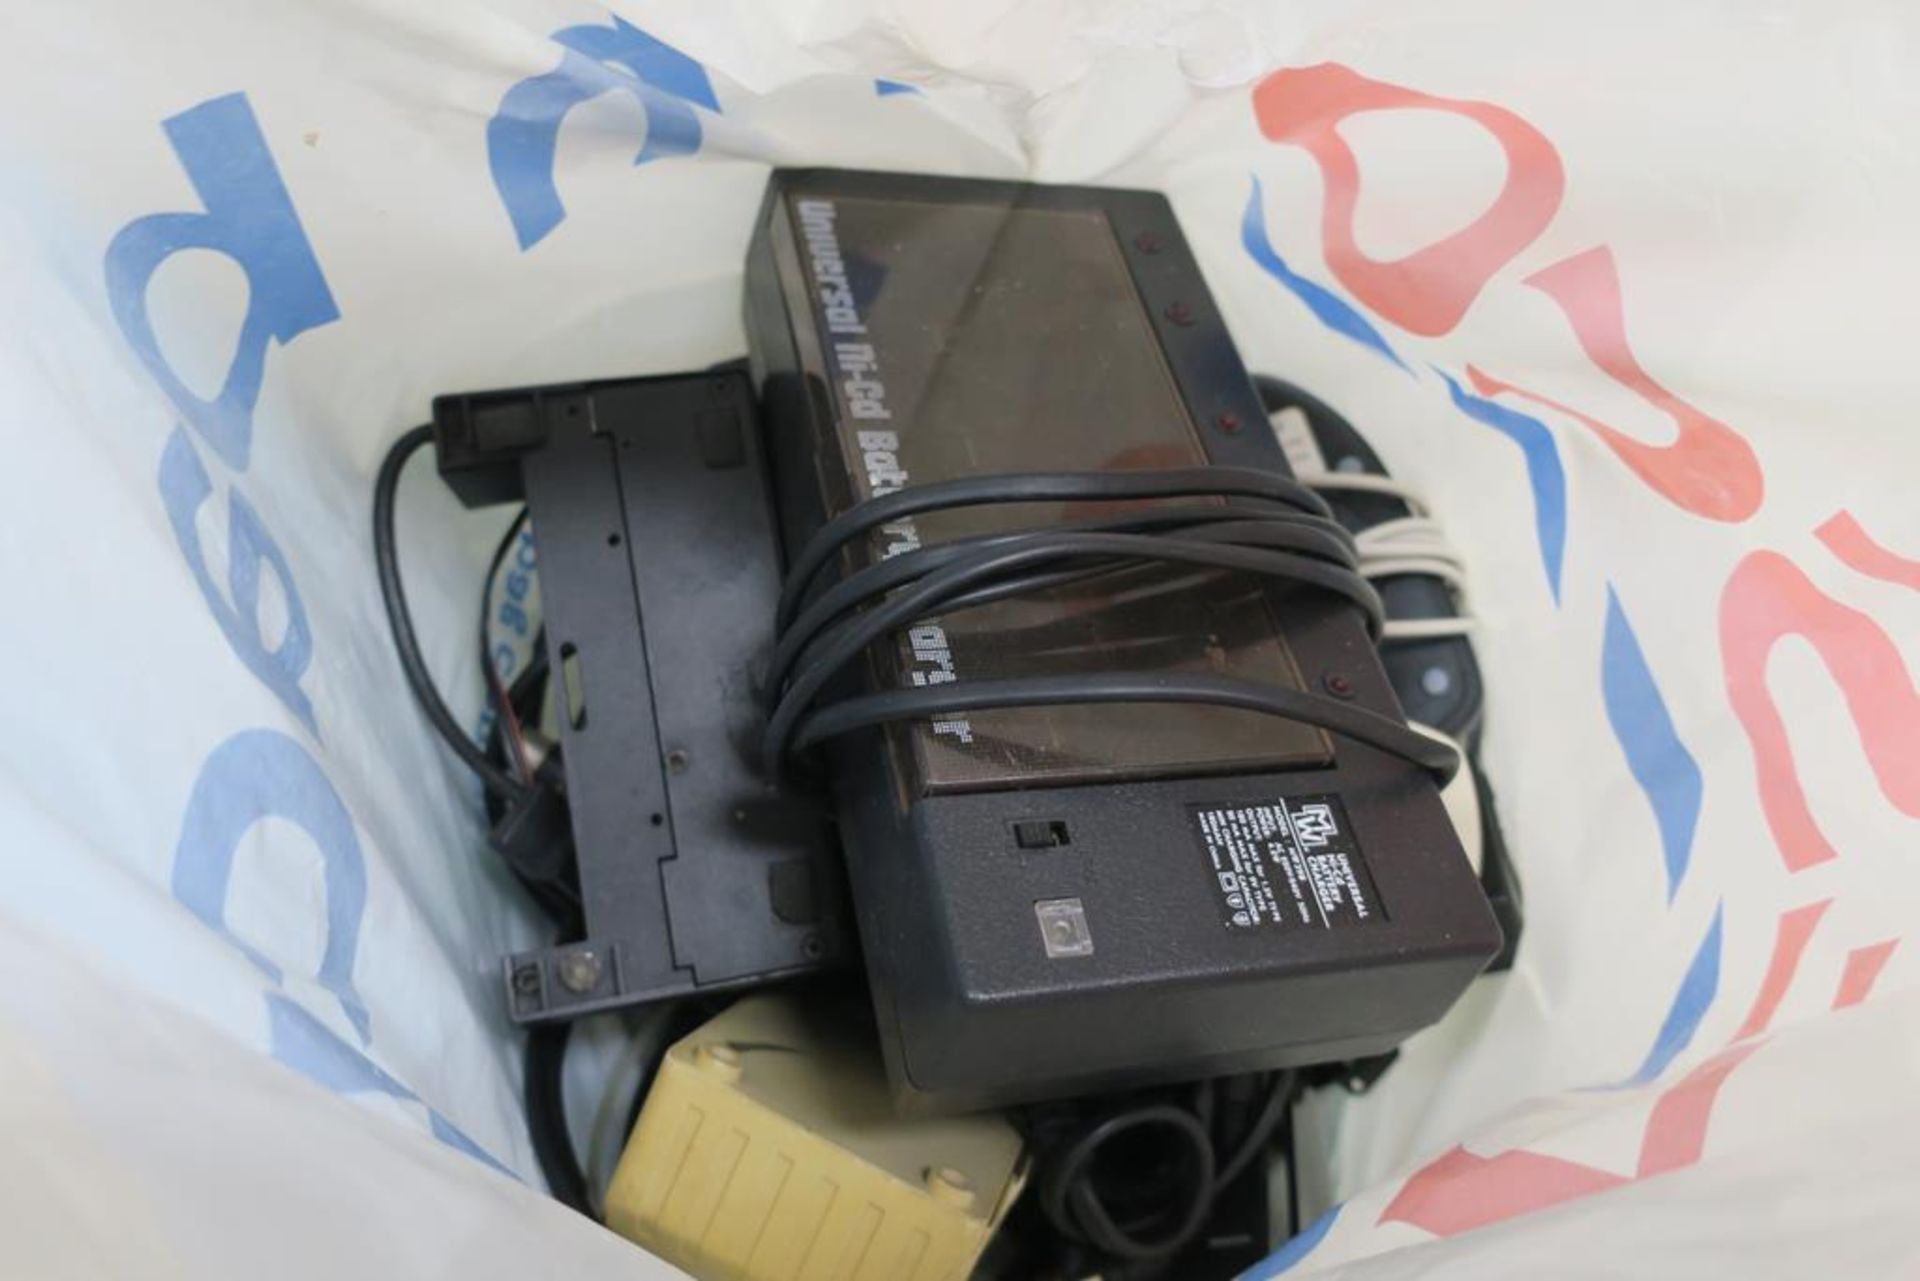 Atari 2600 System (no control pad) with Games - Image 7 of 7